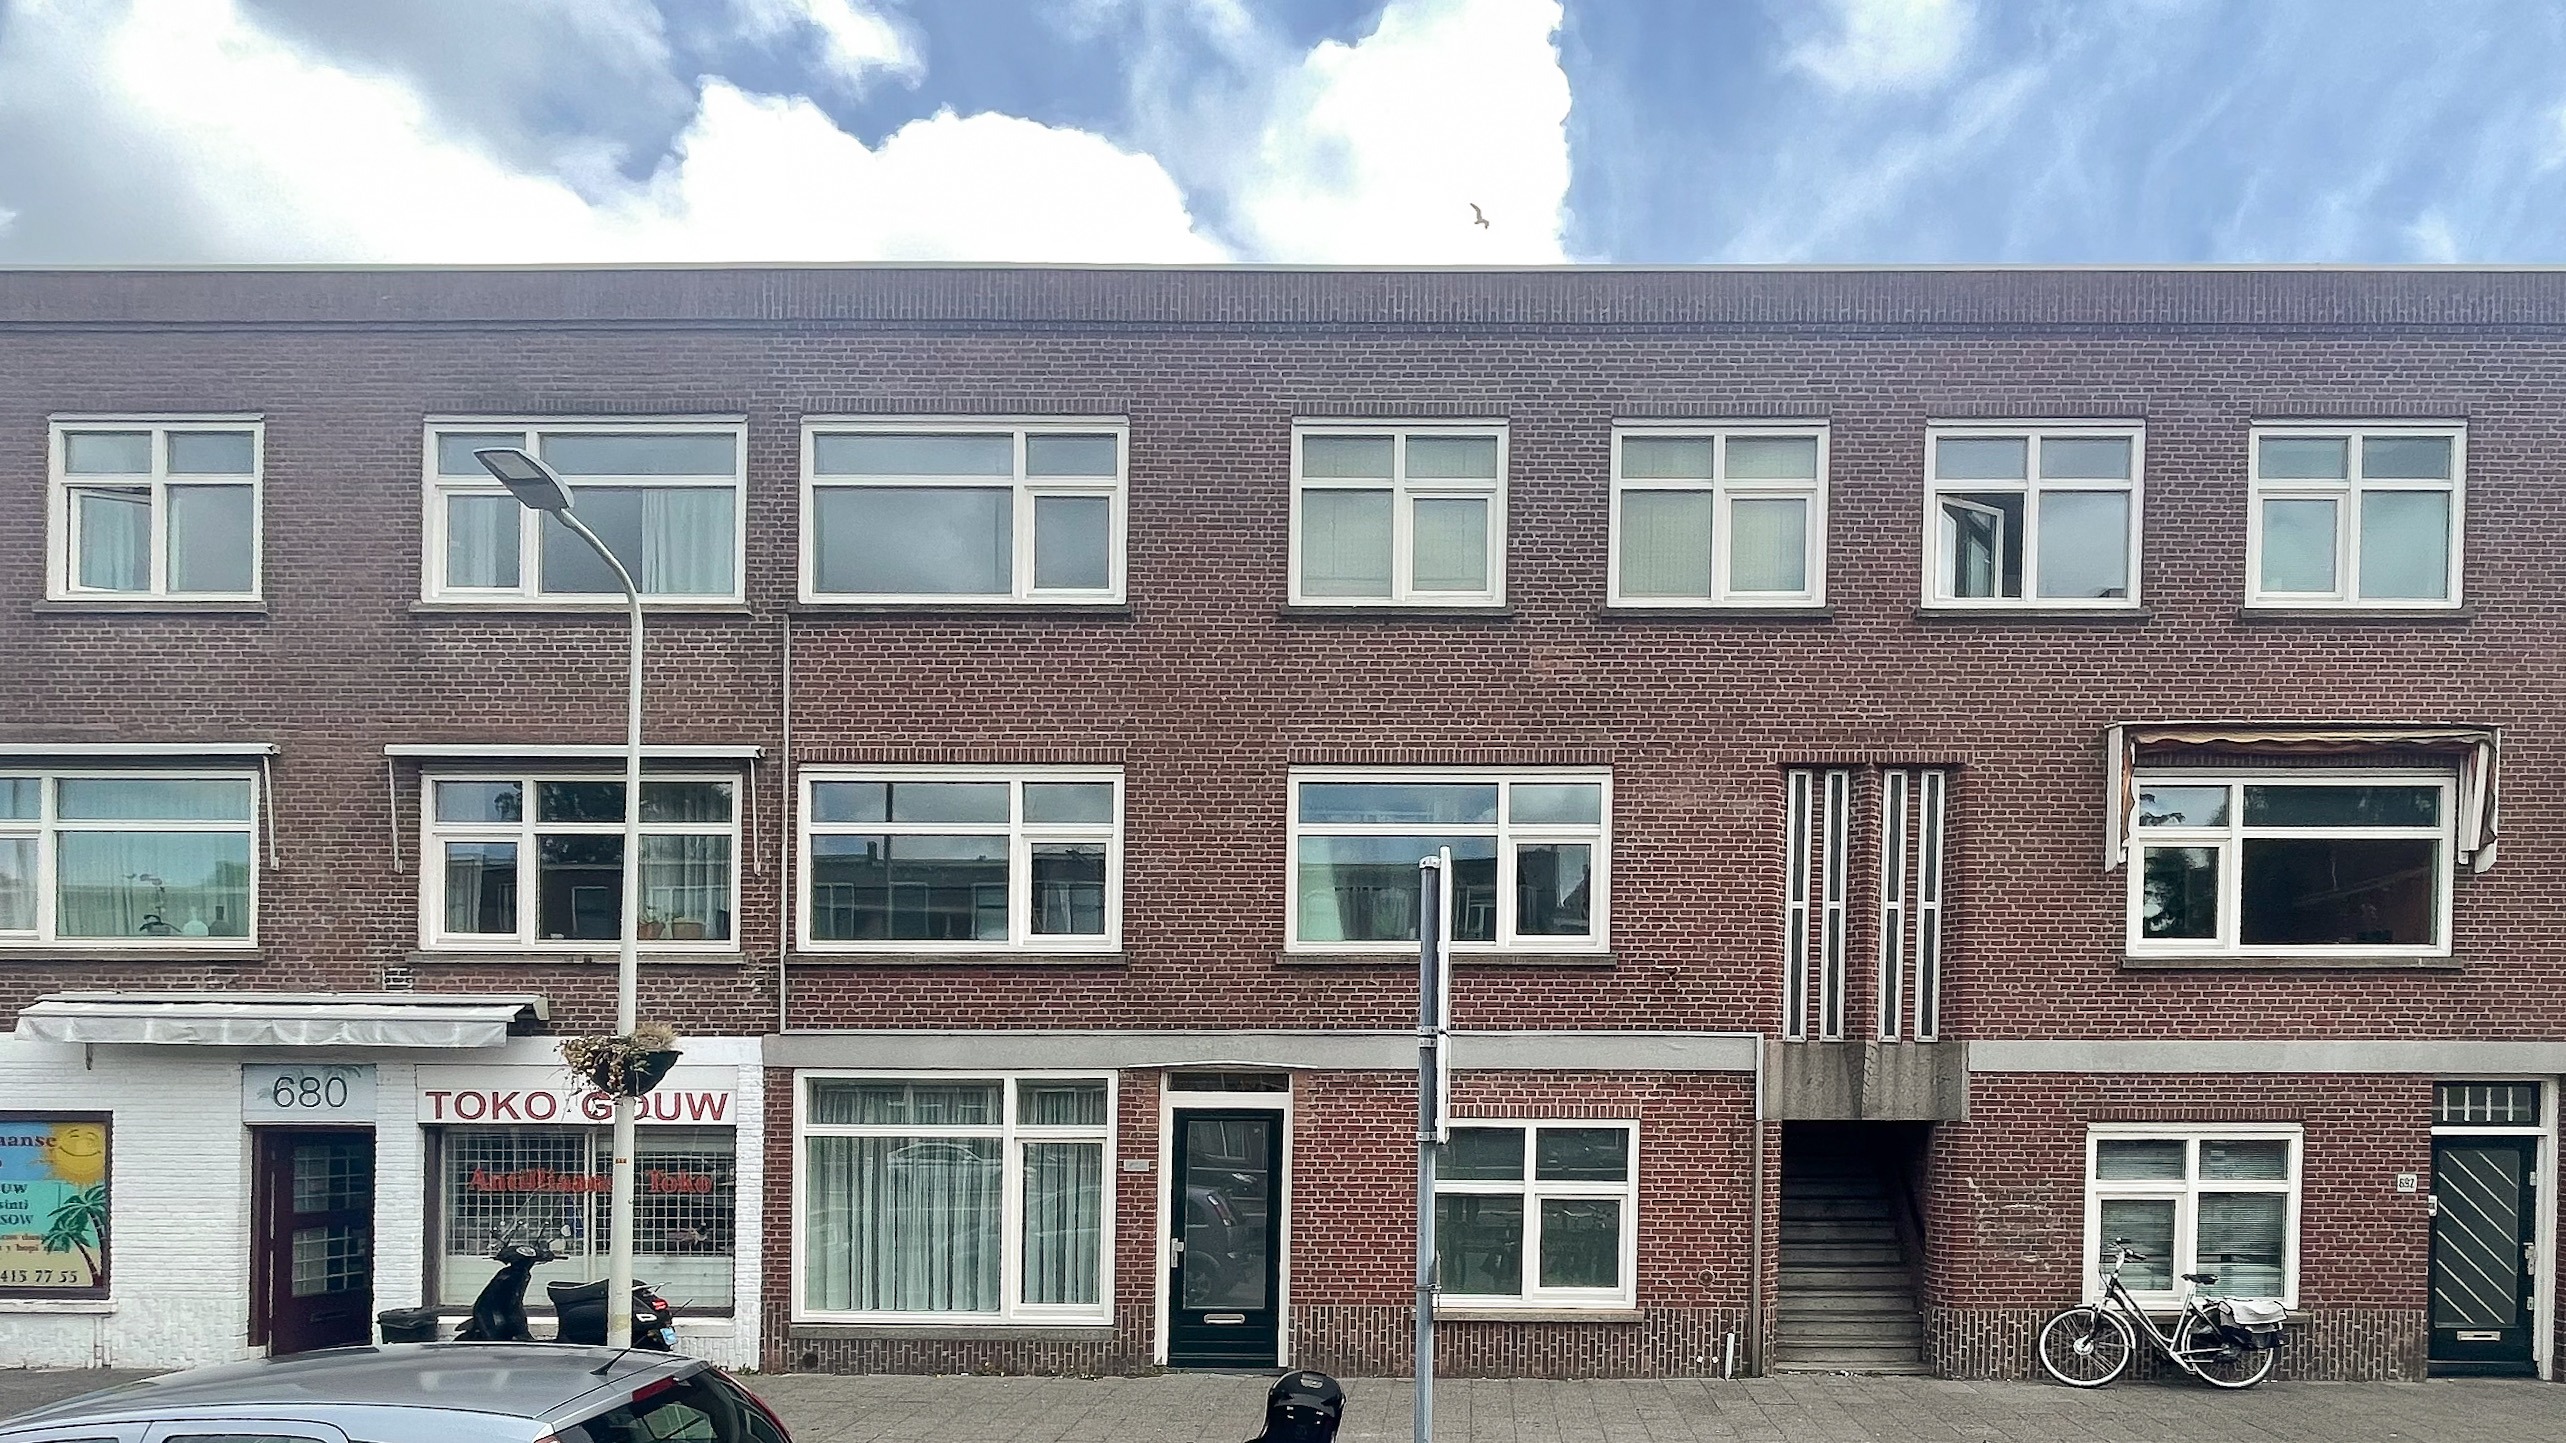 Woning / appartement - Den Haag - Rijswijkseweg 686